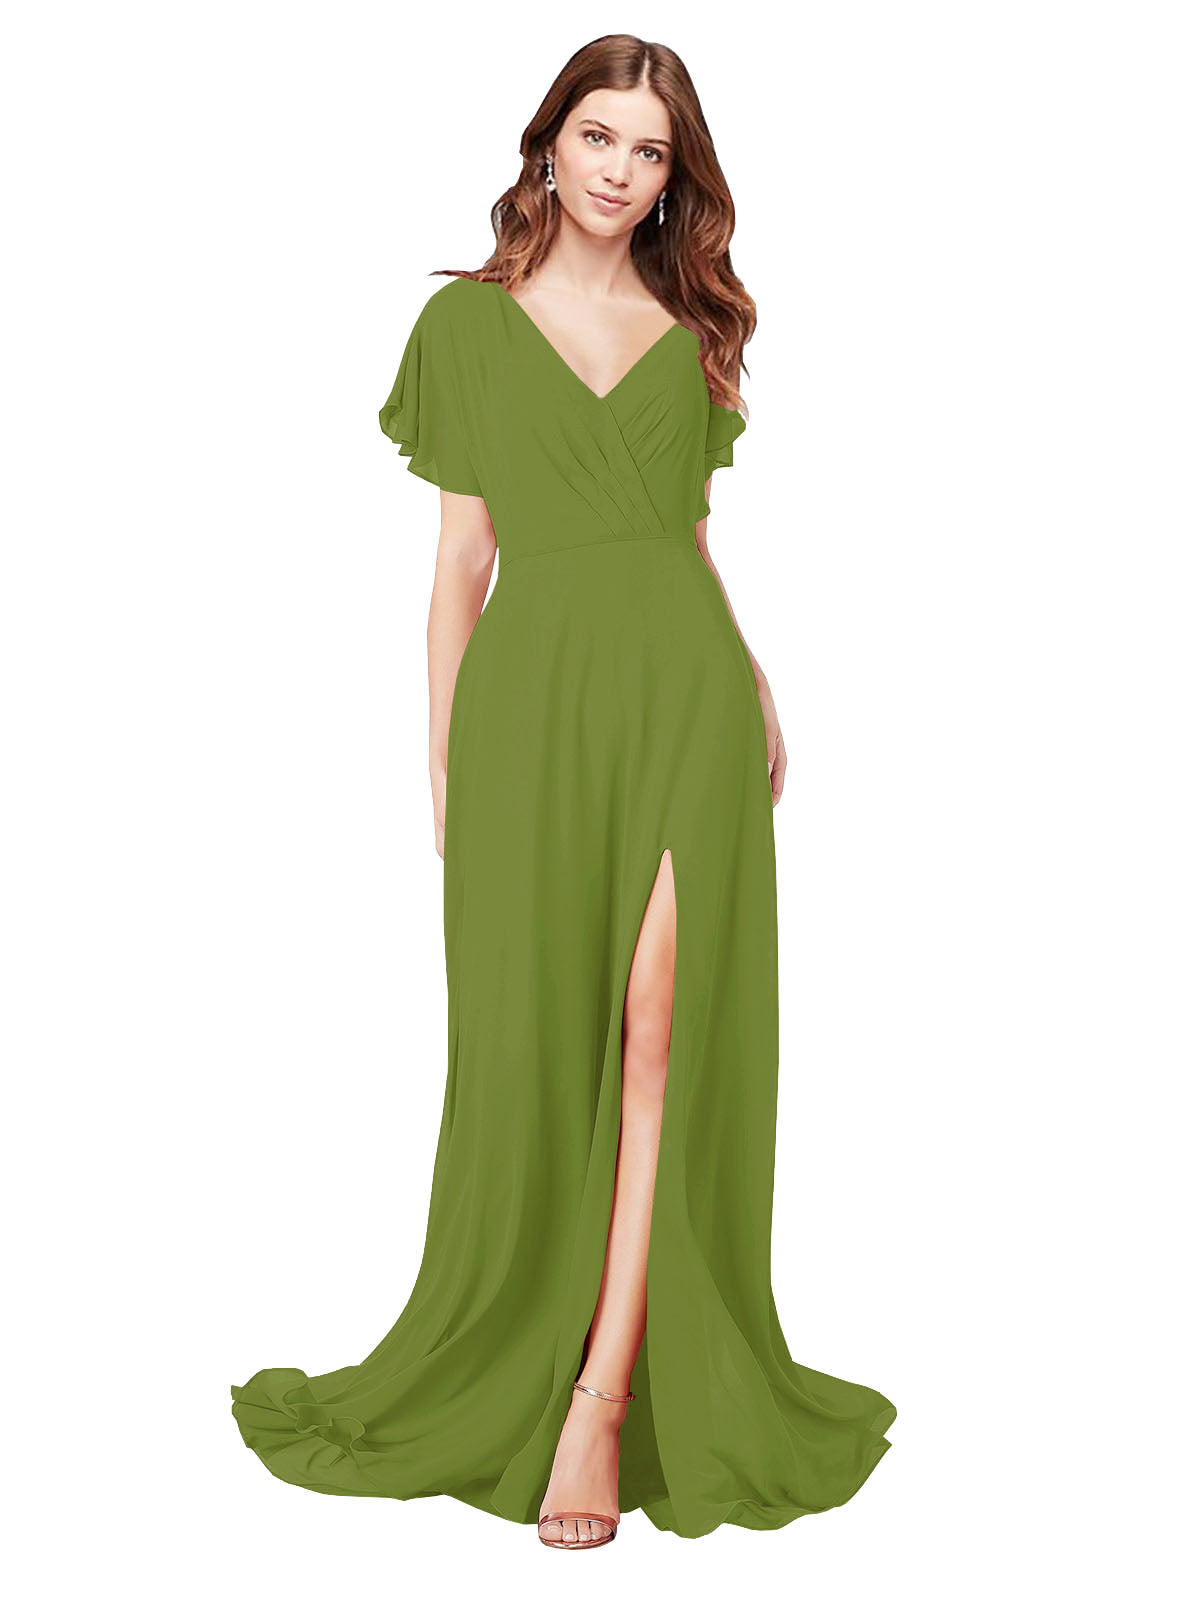 RightBrides Marisol Olive Green A-Line V-Neck Cap Sleeves Long Bridesmaid Dress